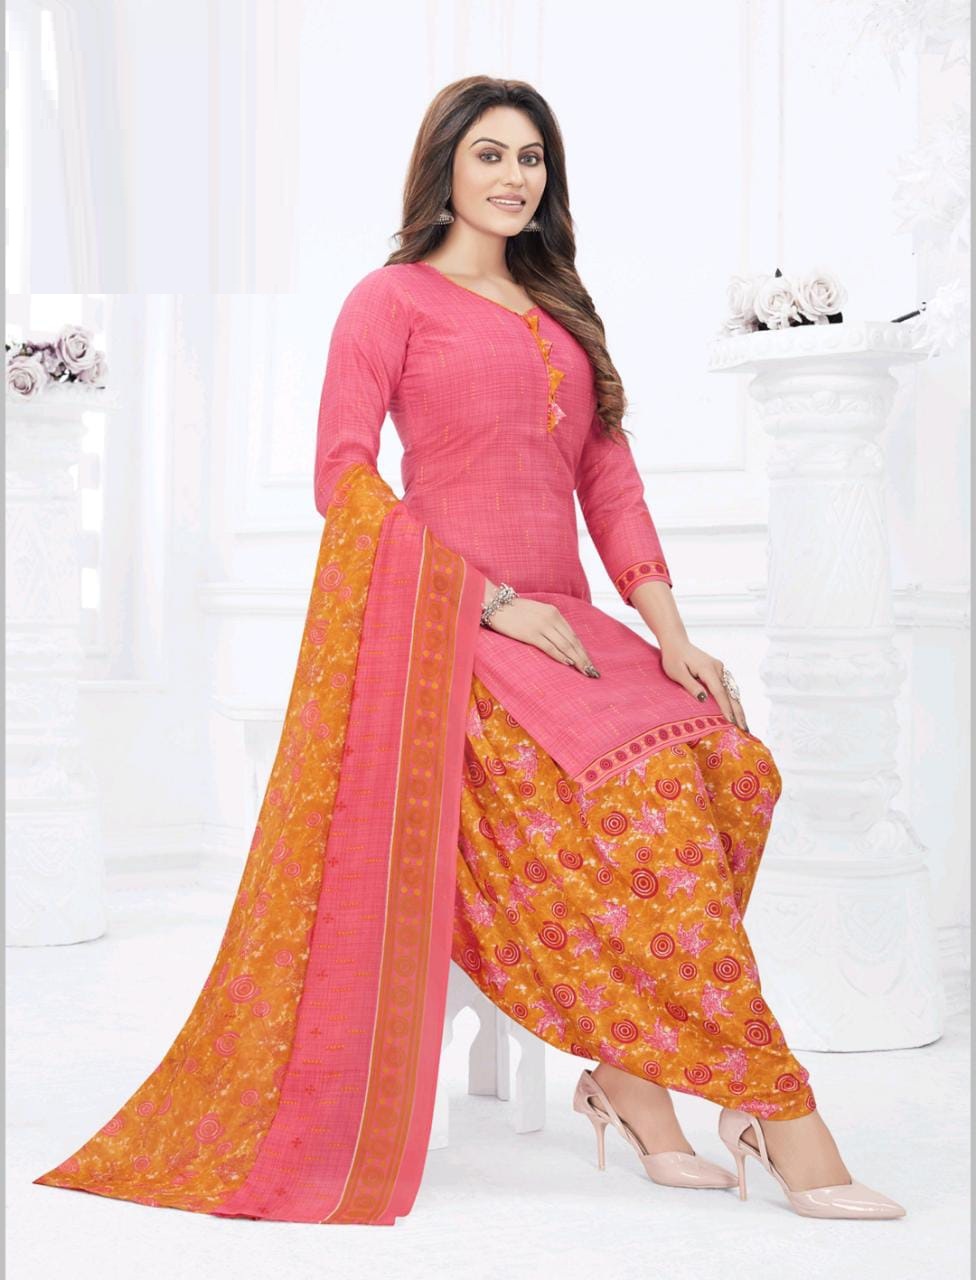 wholesaler of sarees, salwar suit, lehenga choli and kurtis in surat and  Best Exporter of women clothing supplier in india